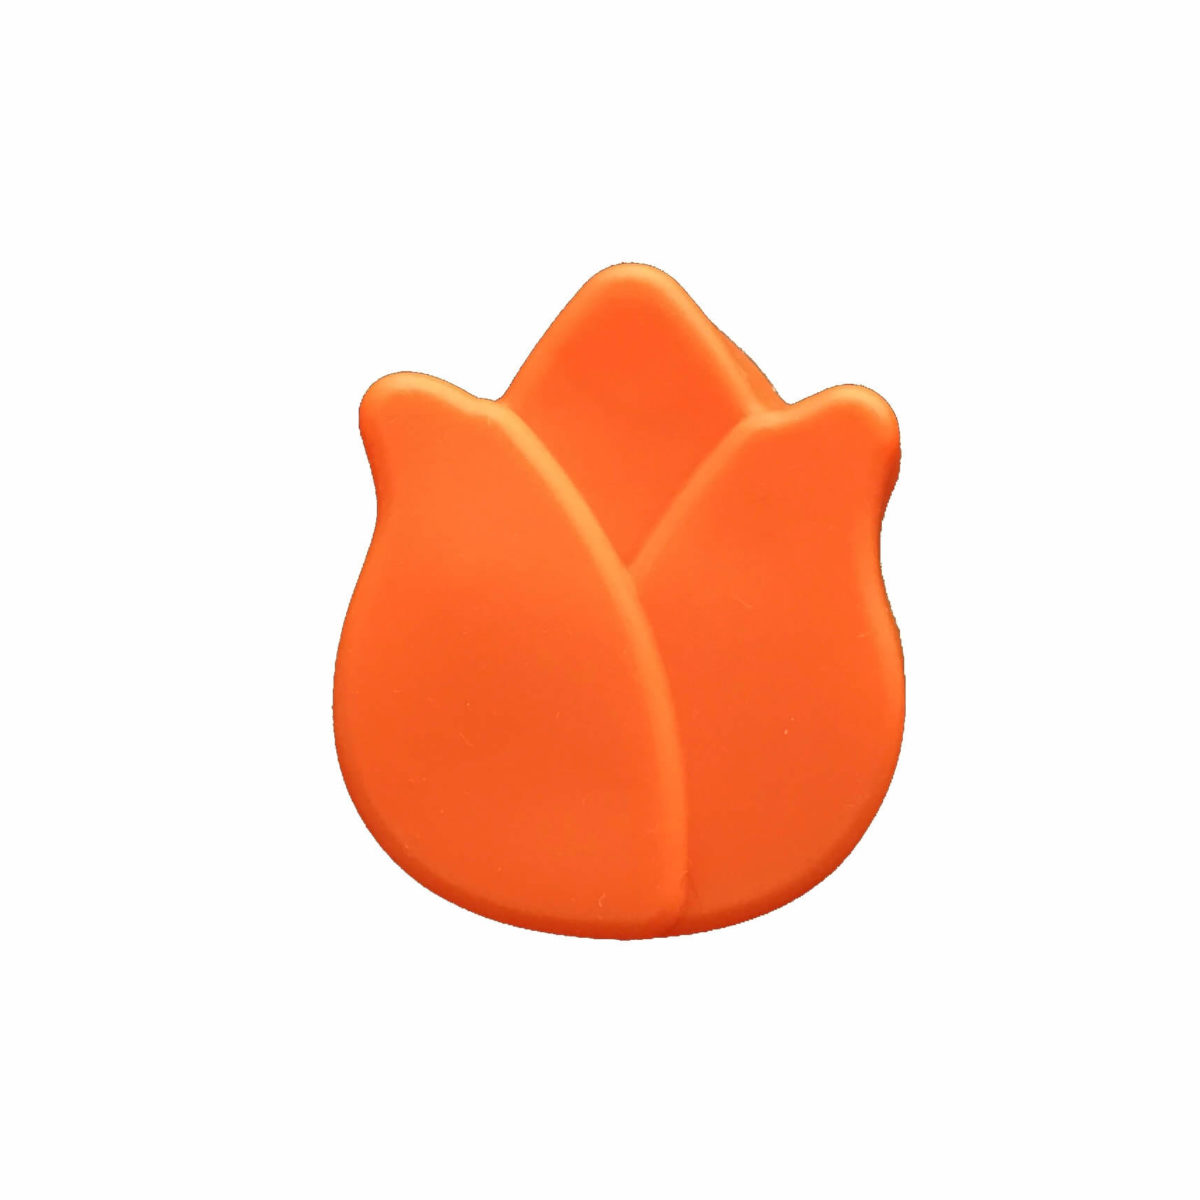 5cm orange tulip single cavity silicone mould